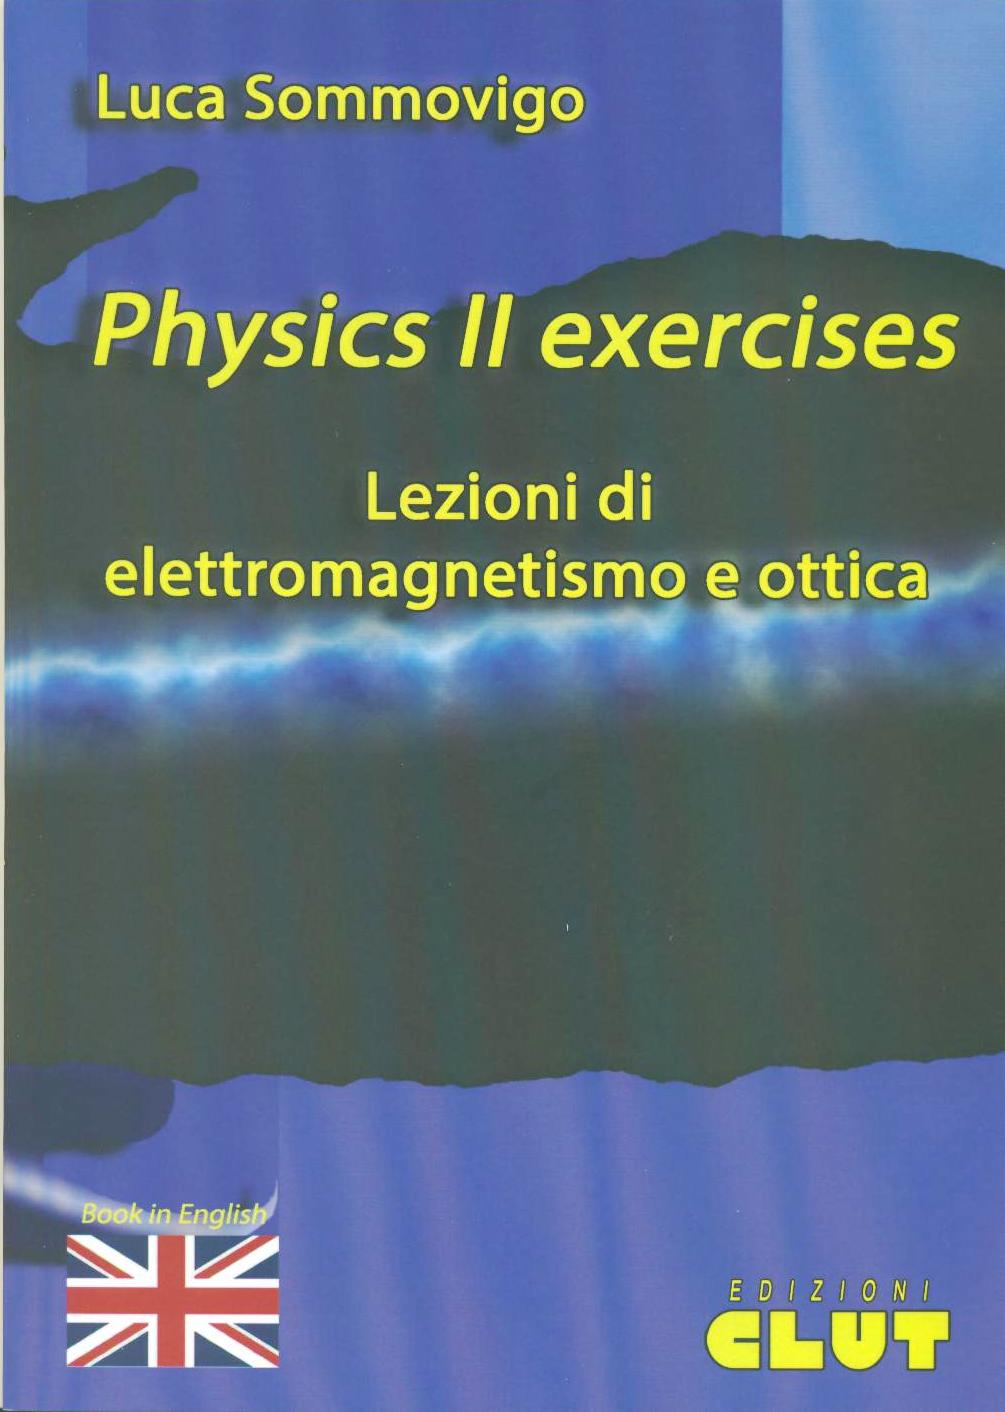 PHYSICS II EXERCISES - Lezioni di elettromagnetismo e ottica